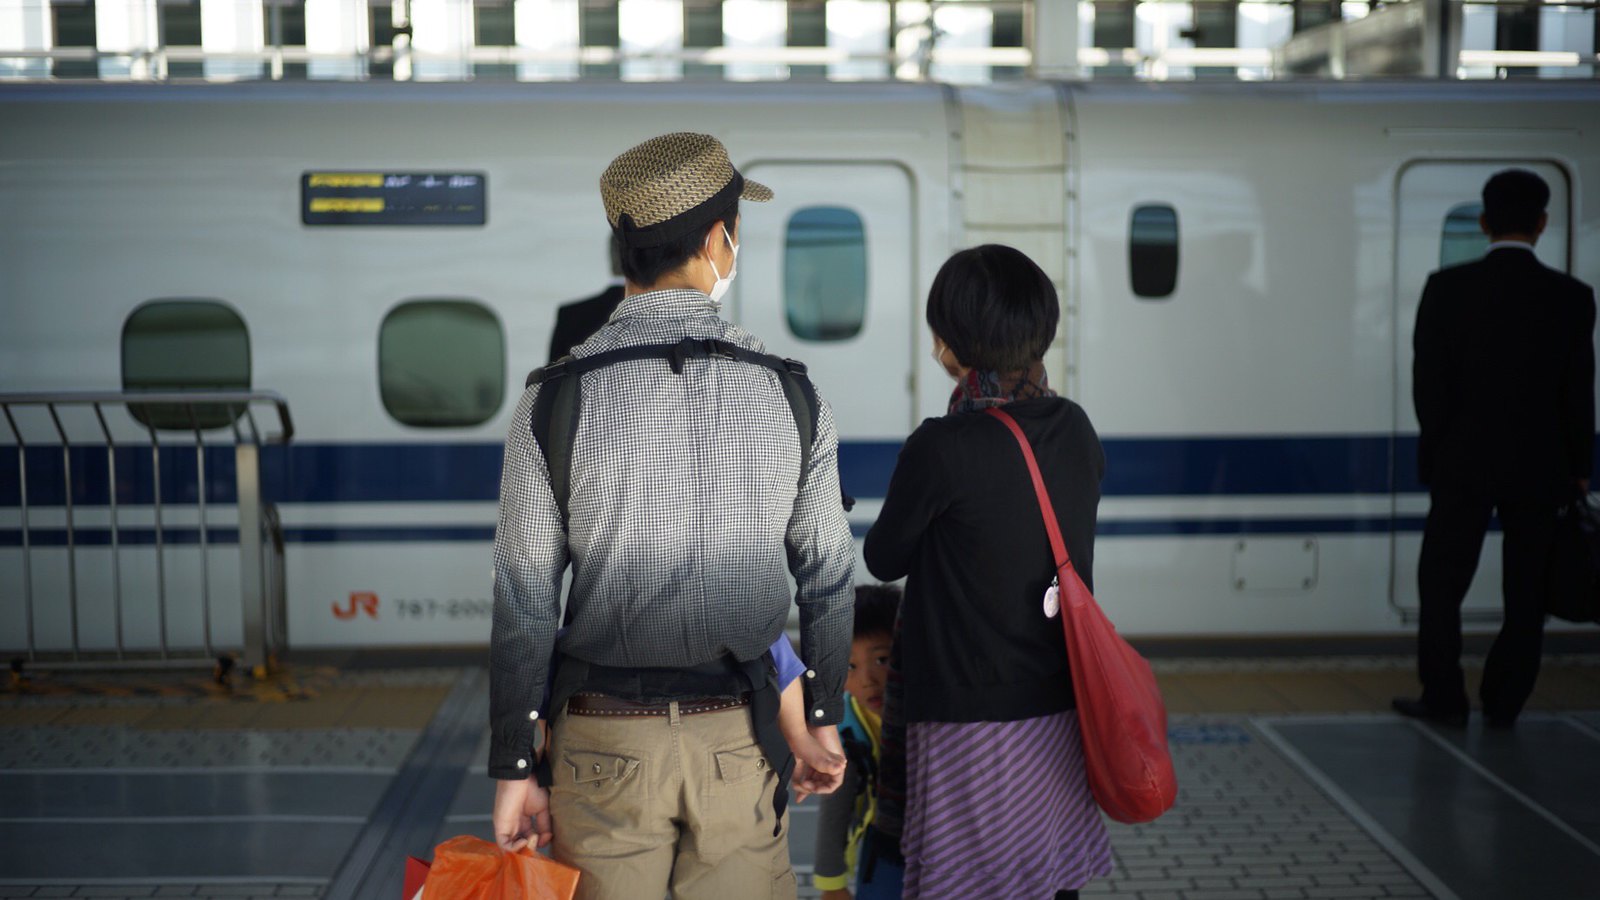 Busted! #Kyoto #Shinkansen #japan15 #foto #SonyA7 #Voigtlander40mm